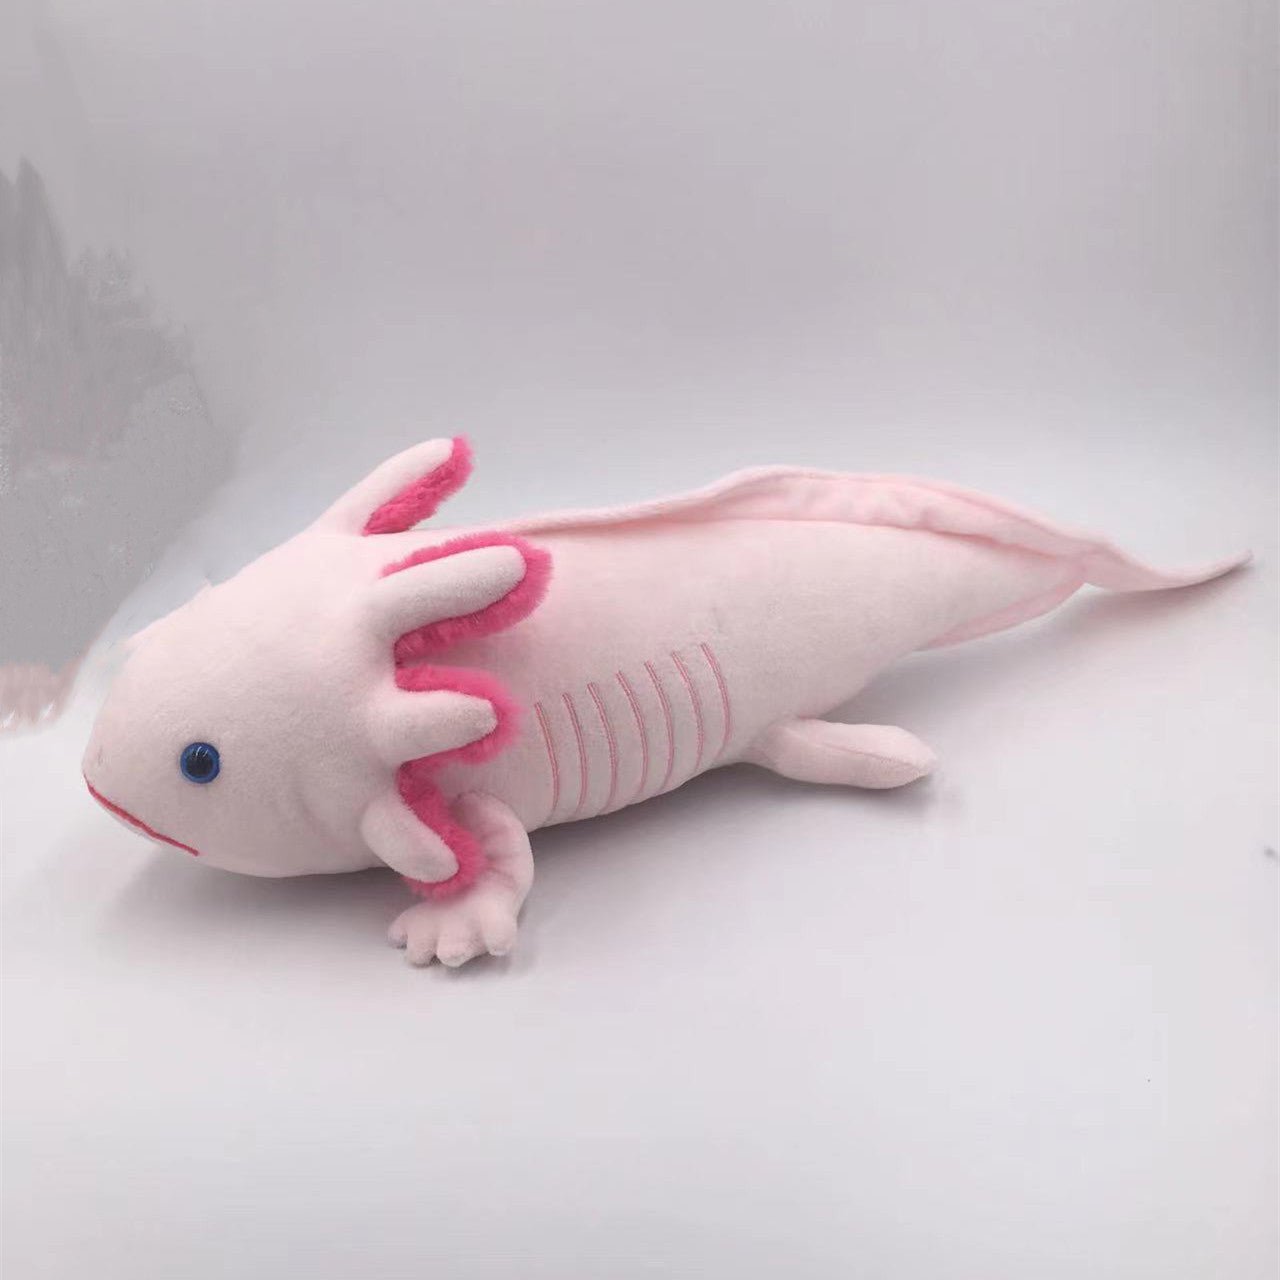 Simulated Lifelike Pink Salamander Plush Animal Toy - TOY-PLU-77601 - Yangzhoumuka - 42shops